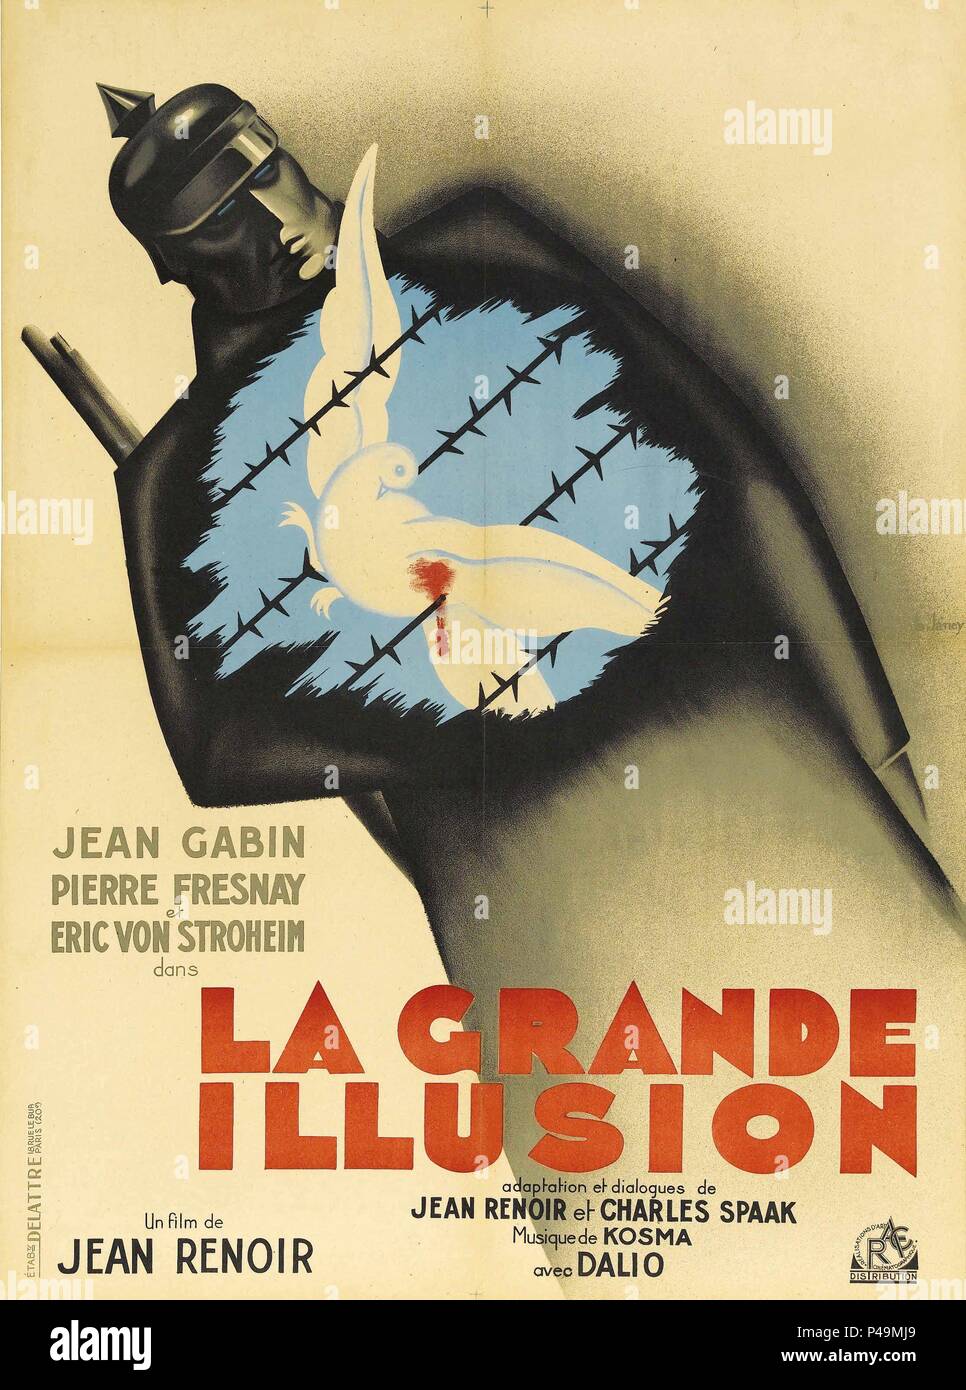 Original Film Titel: LA GRANDE ILLUSION. Englischer Titel: GRAND ILLUSION, DER. Regisseur: Jean Renoir. Jahr: 1937. Credit: REALISATIONEN D'ART CINEMATOGRAPHIQUE/Album Stockfoto